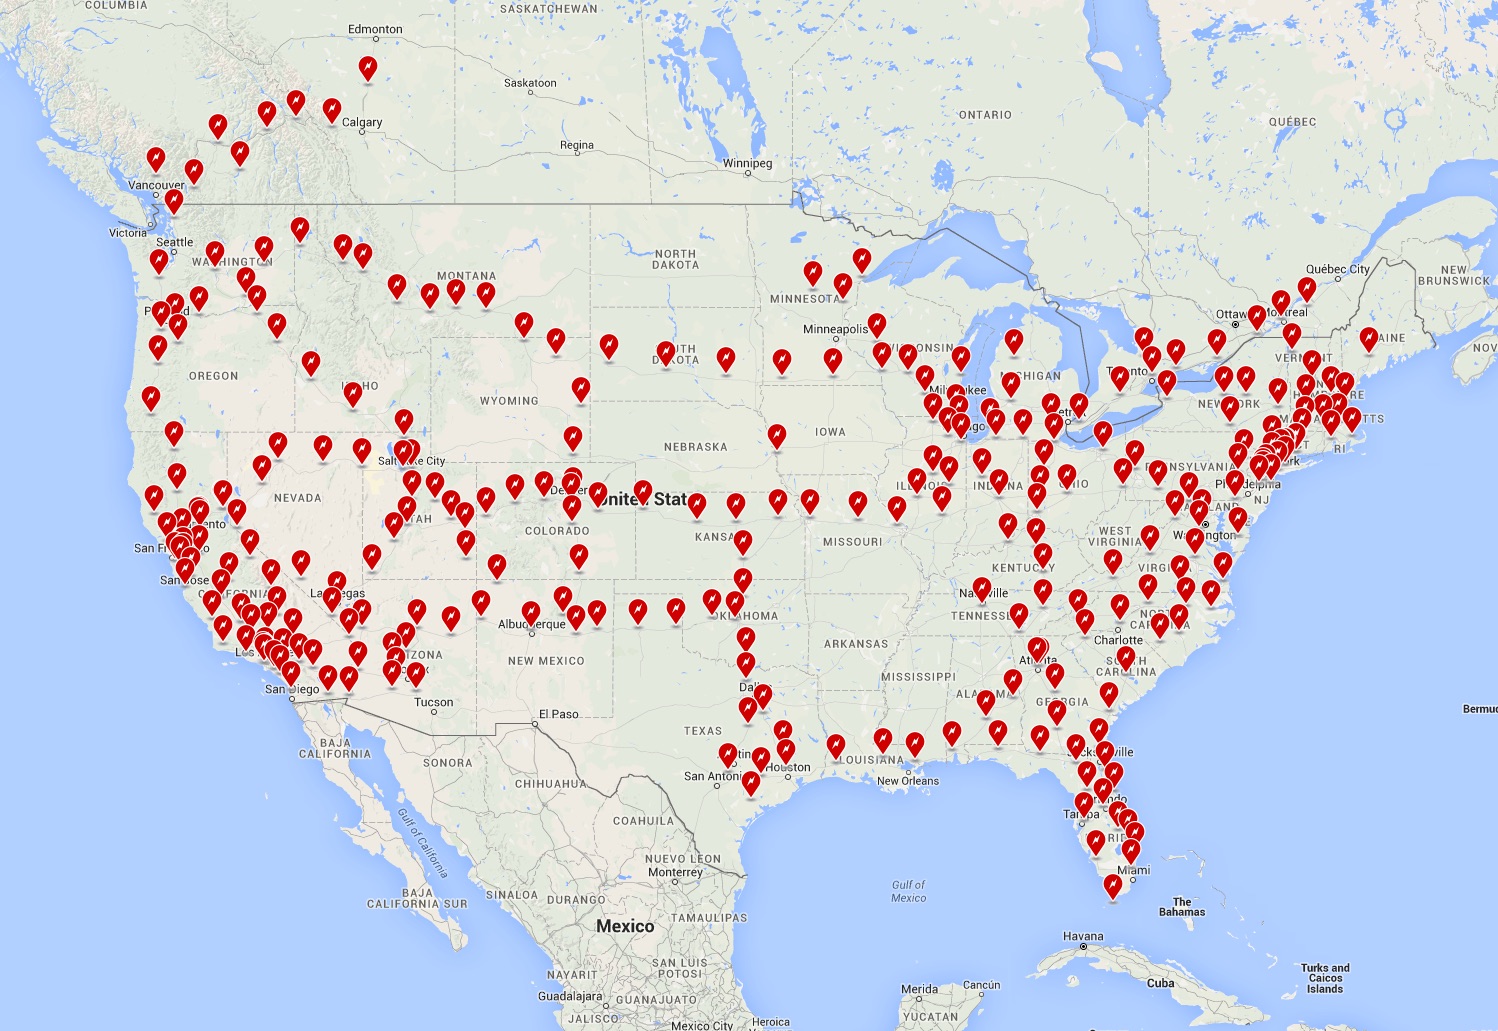 Tesla Supercharger network across North America [Source: Tesla Motors]